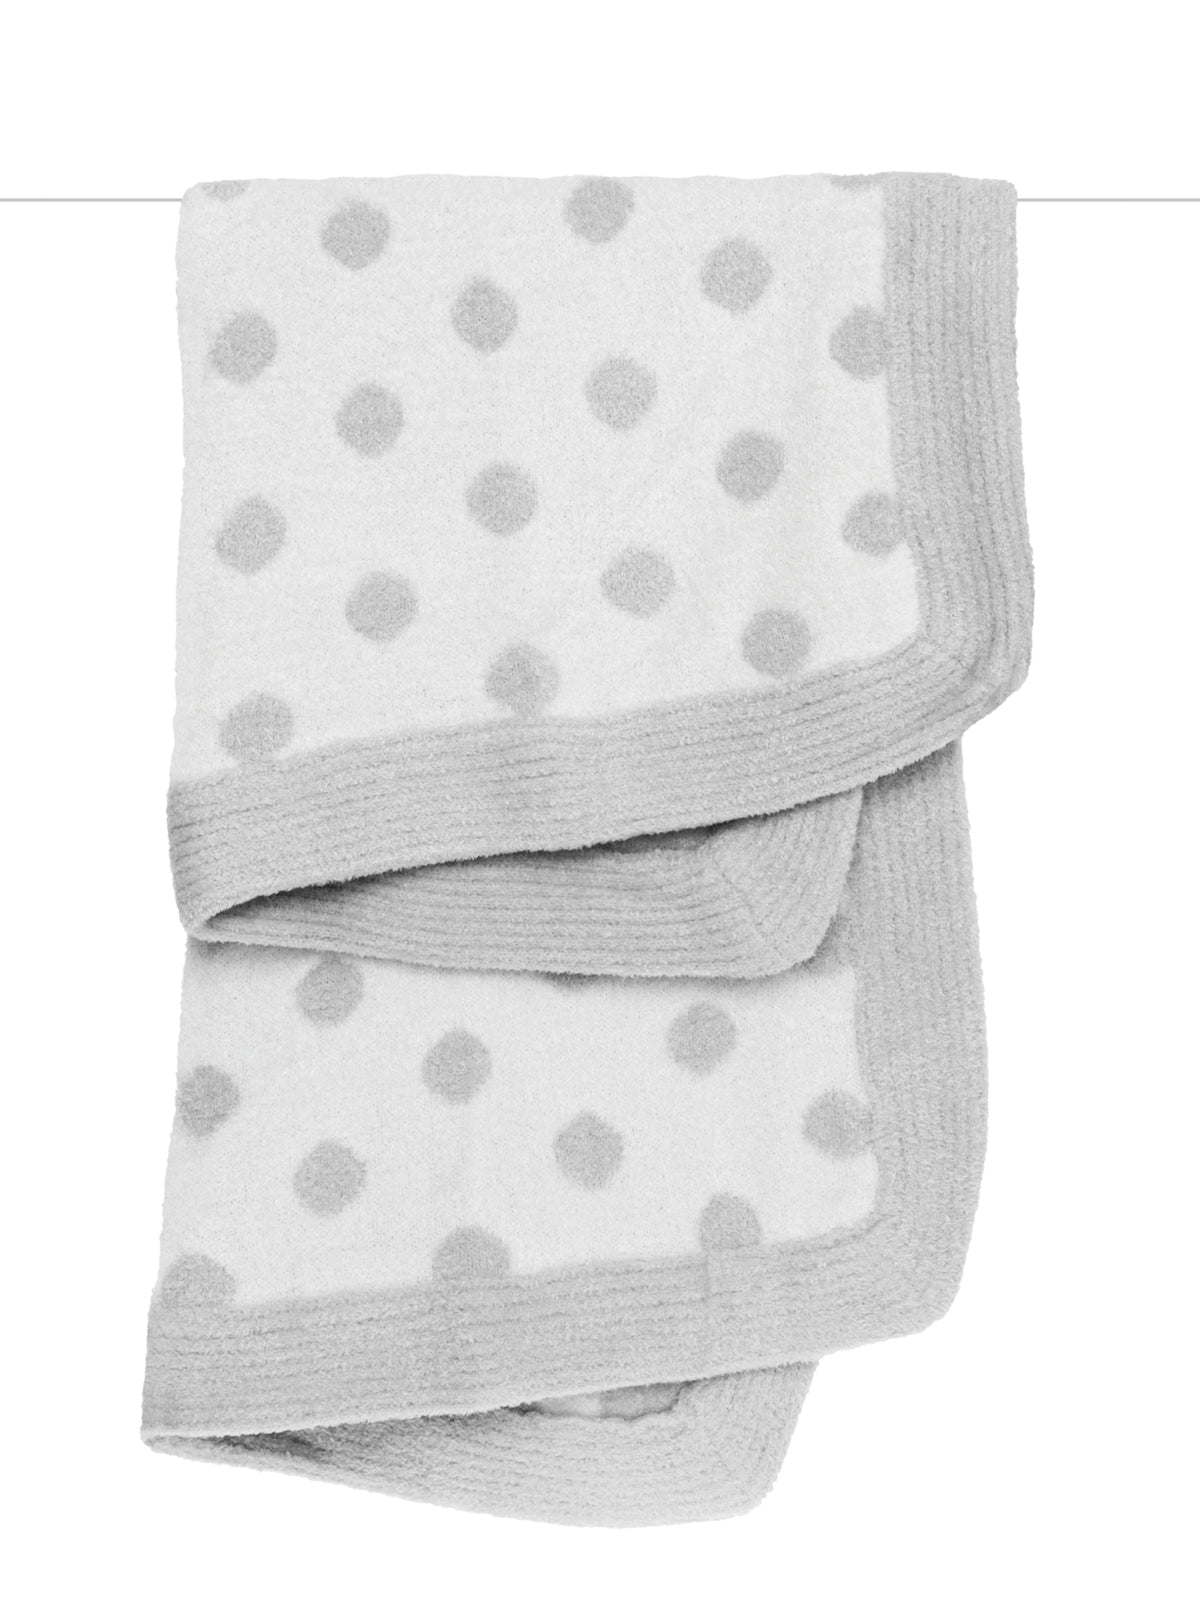 Dolce™ Dot Baby Blanket